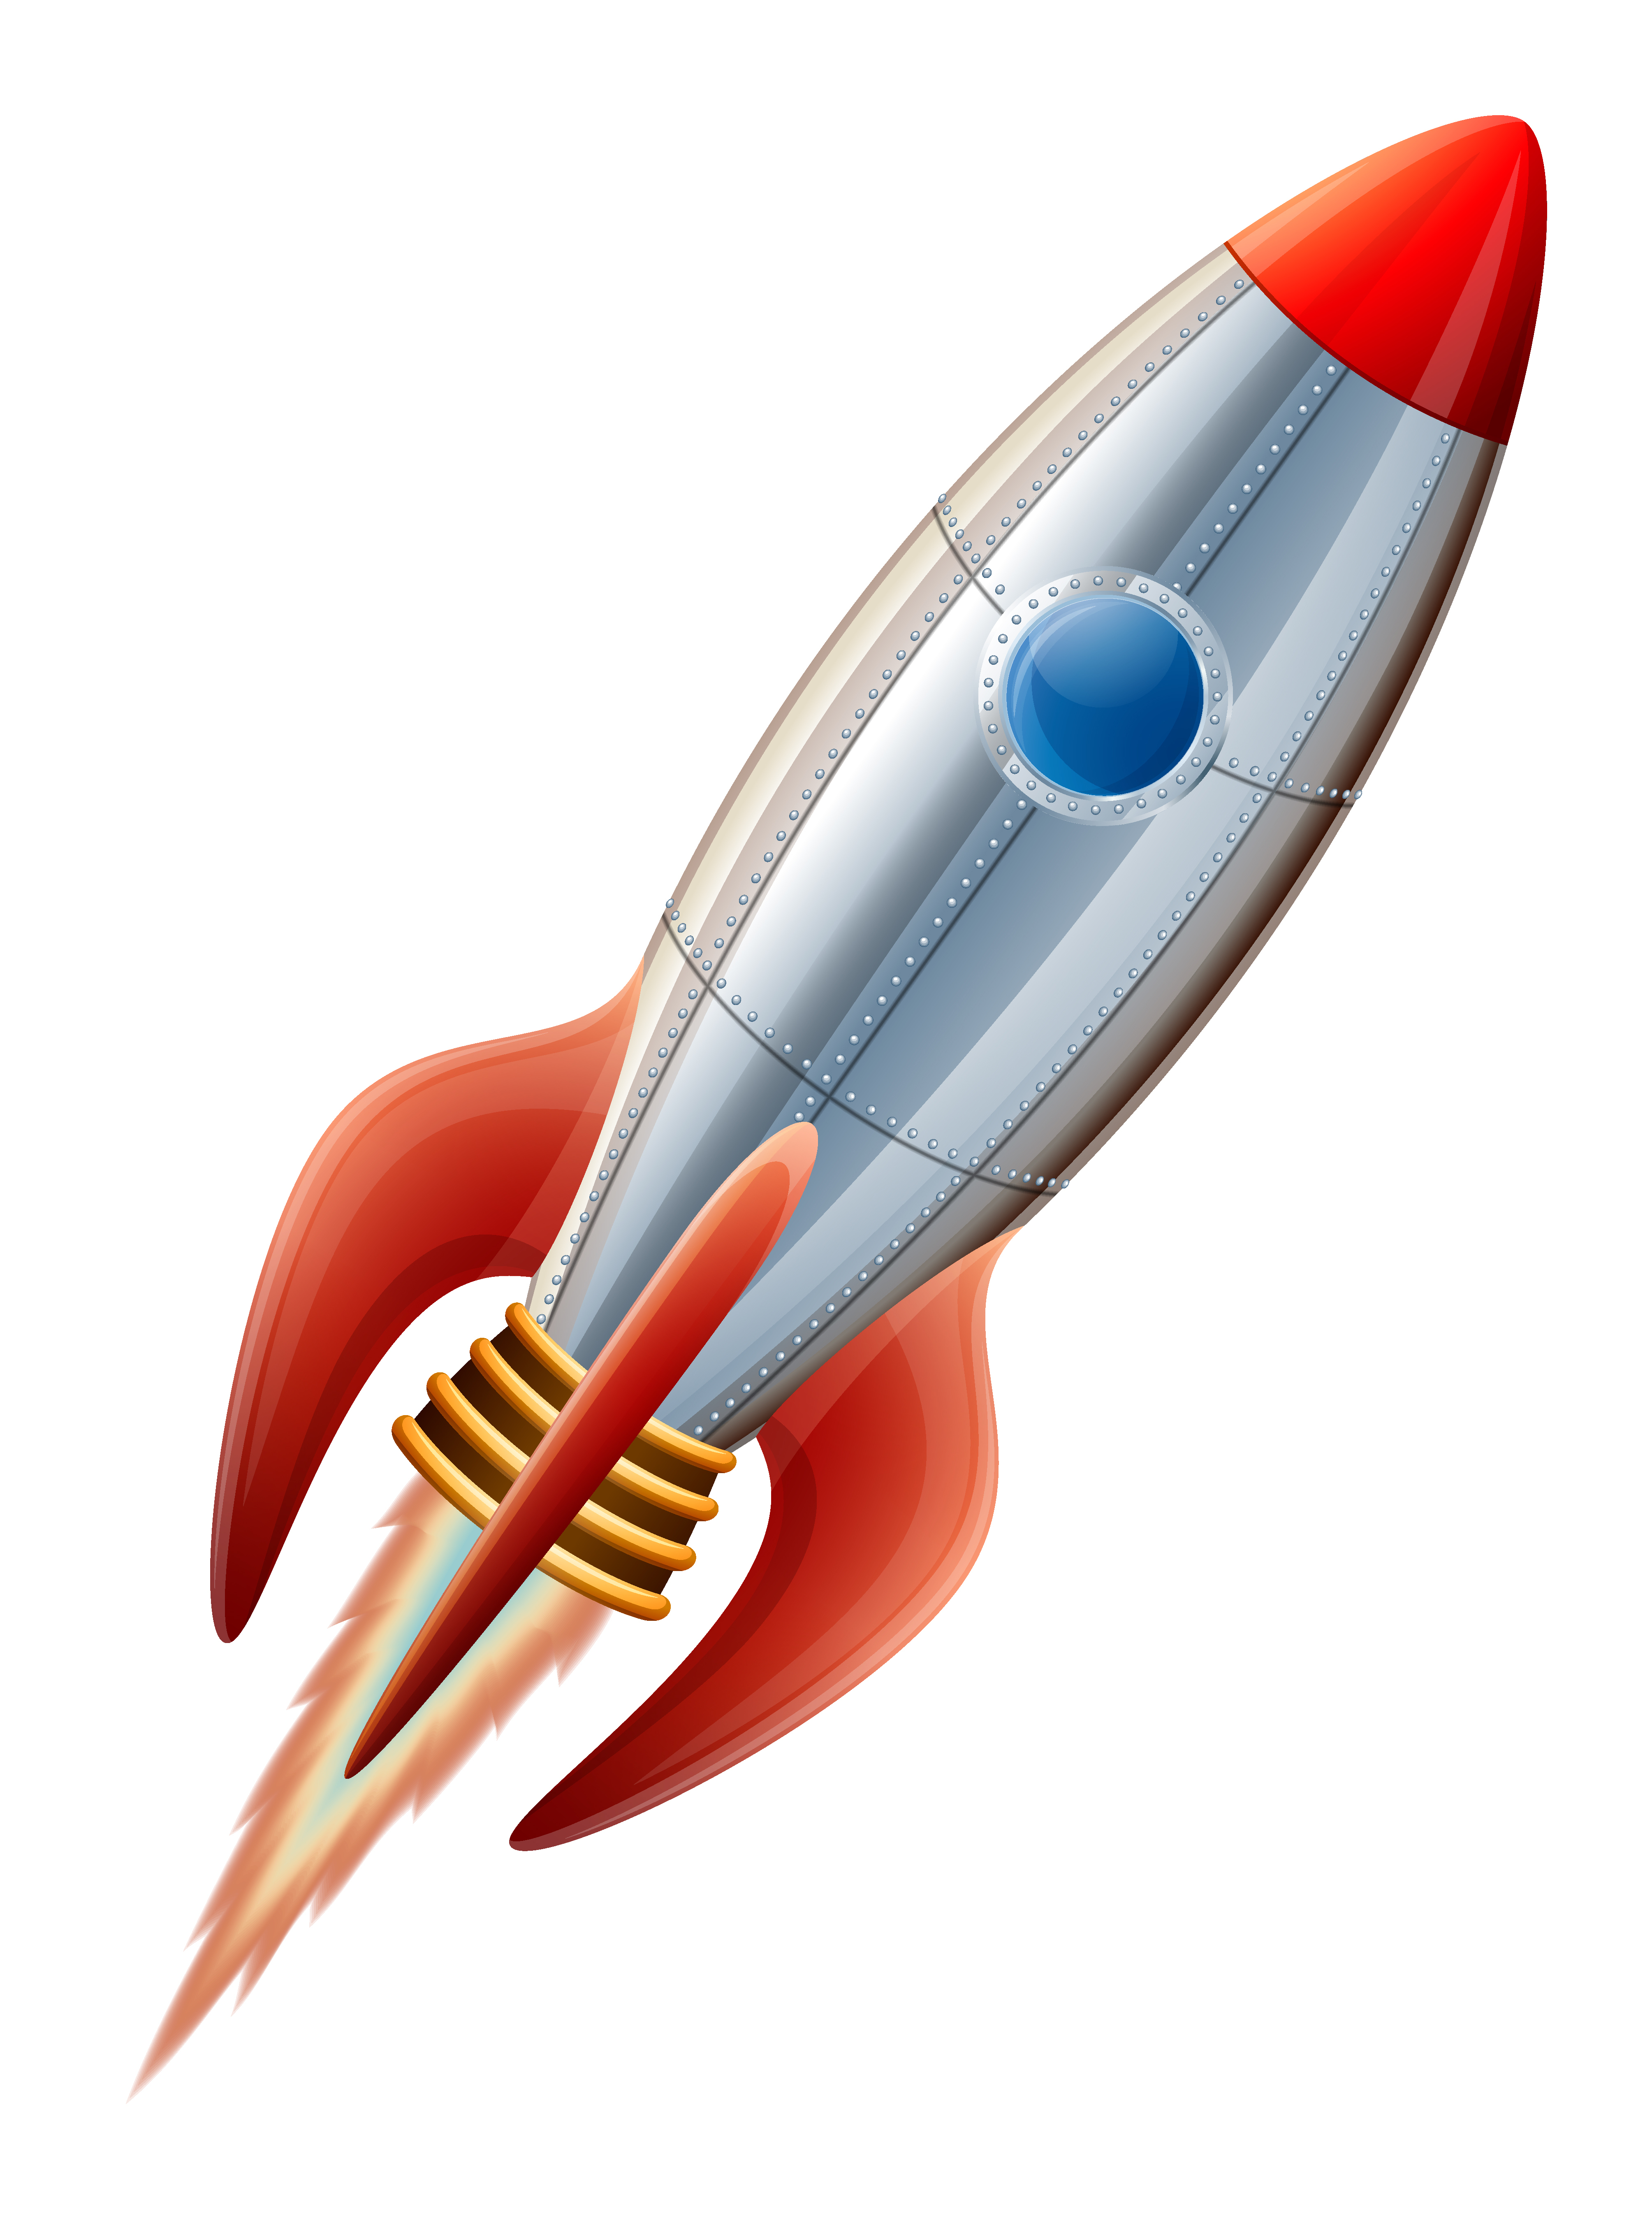 Rocket Ship | Free Download Clip Art | Free Clip Art | on Clipart ...